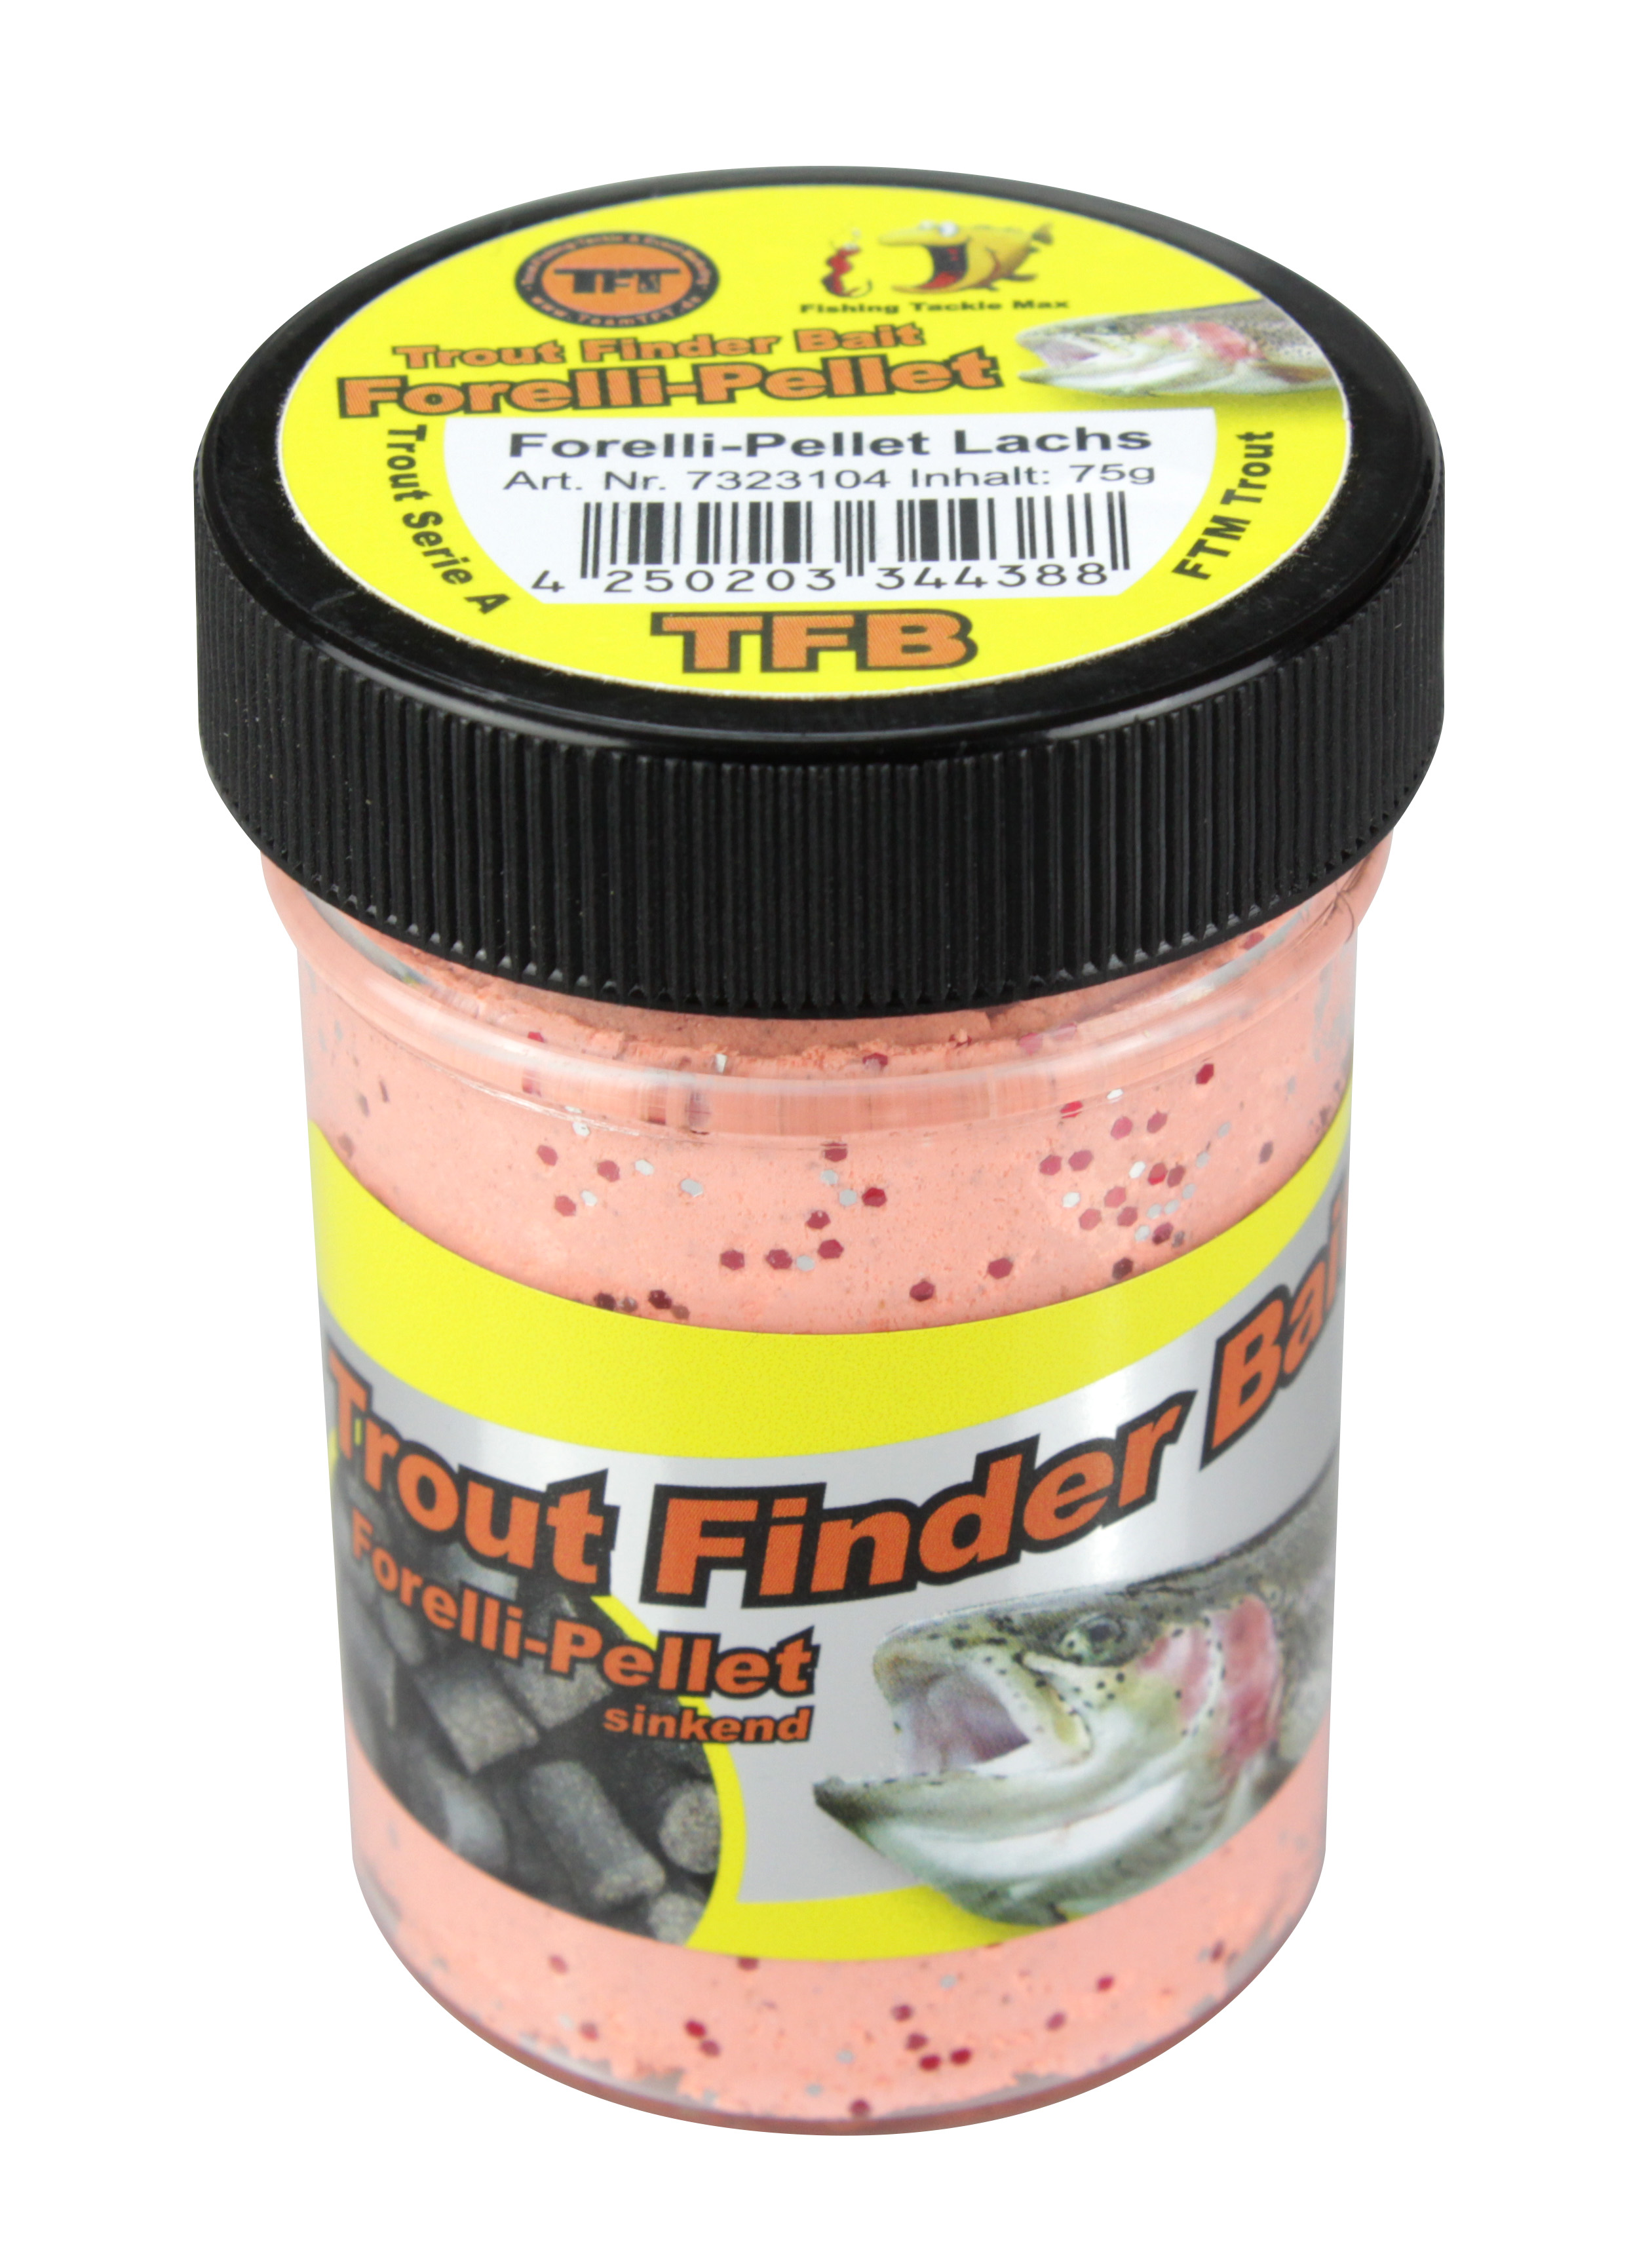 FTM Forelli-Pellet Glitter Lachs